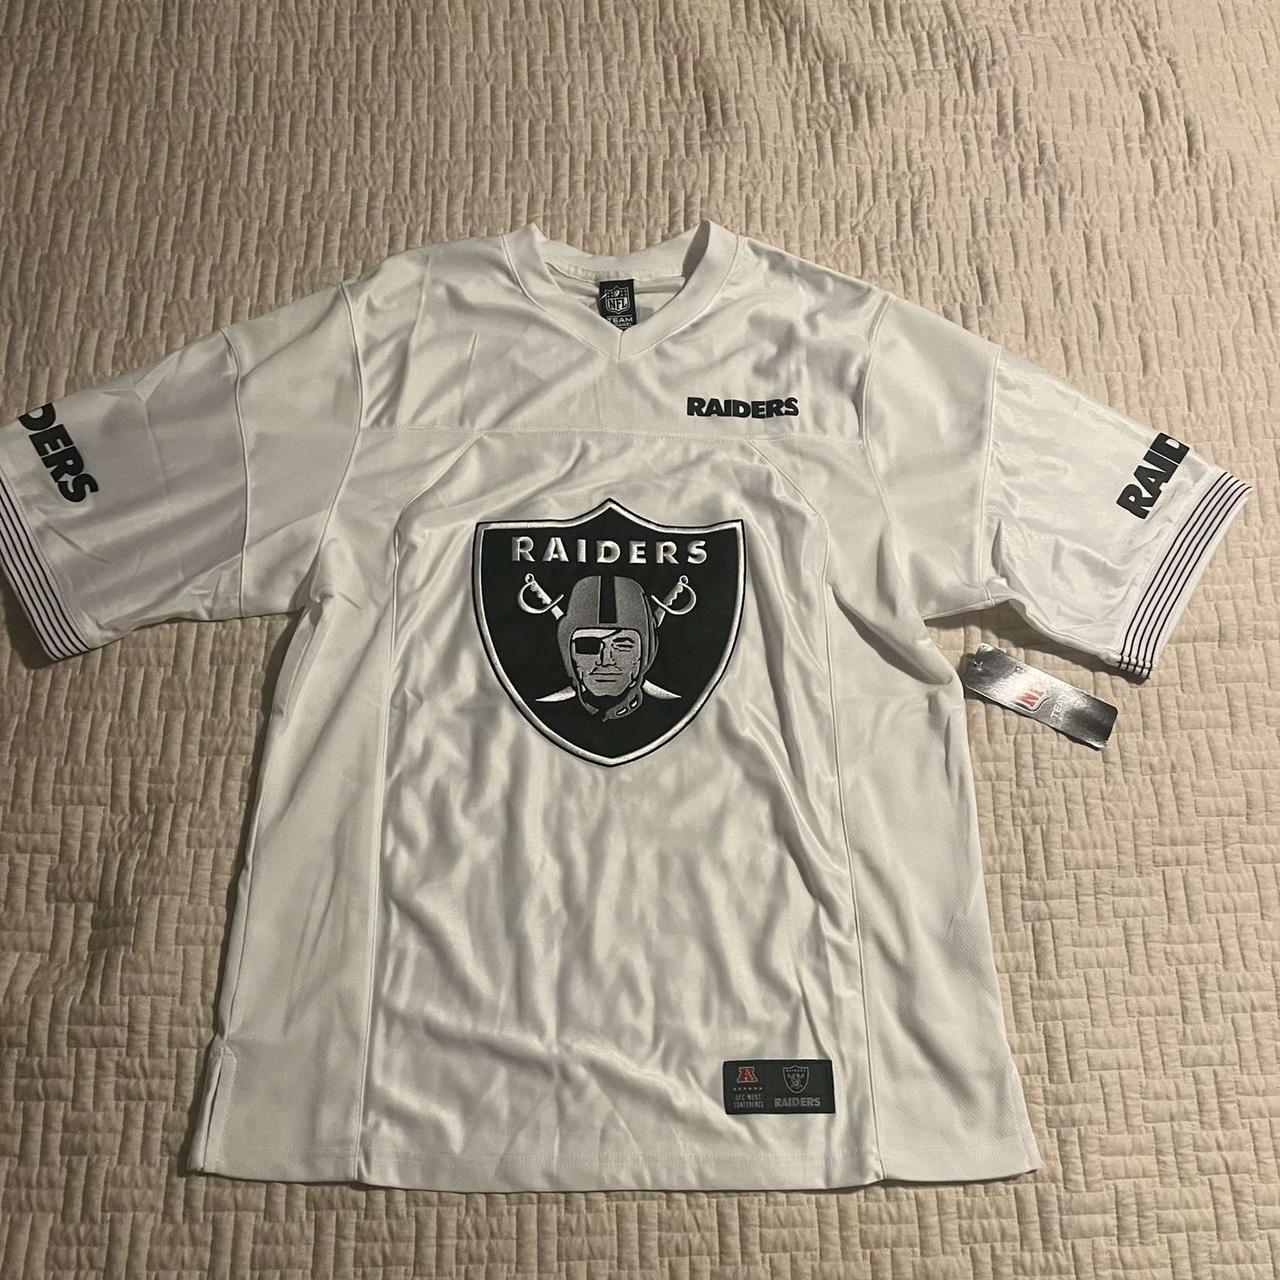 Las Vegas Raiders NFL store jersey